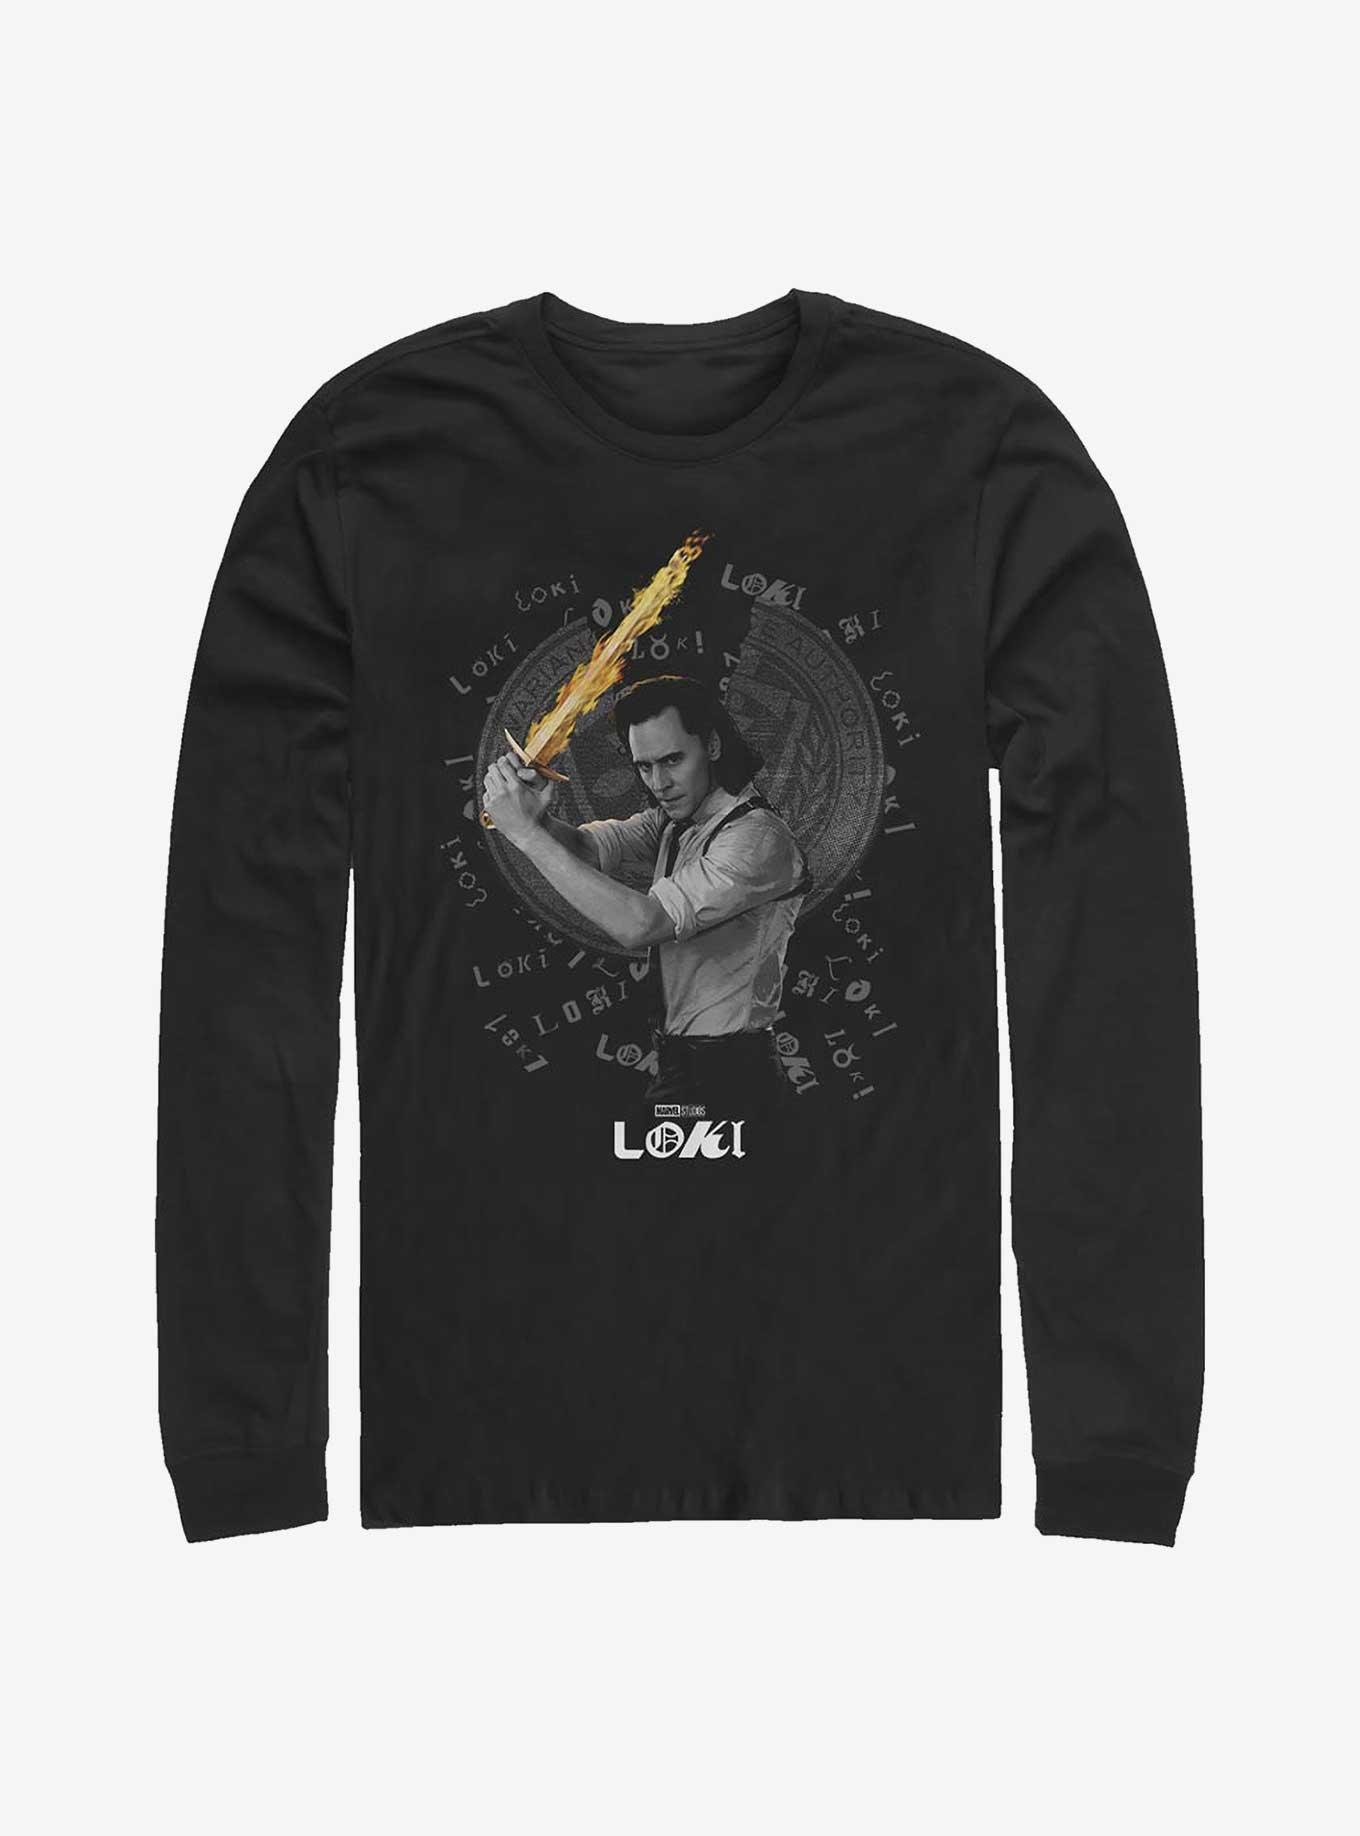 Marvel Loki Laevateinn Sword Long-Sleeve T-Shirt